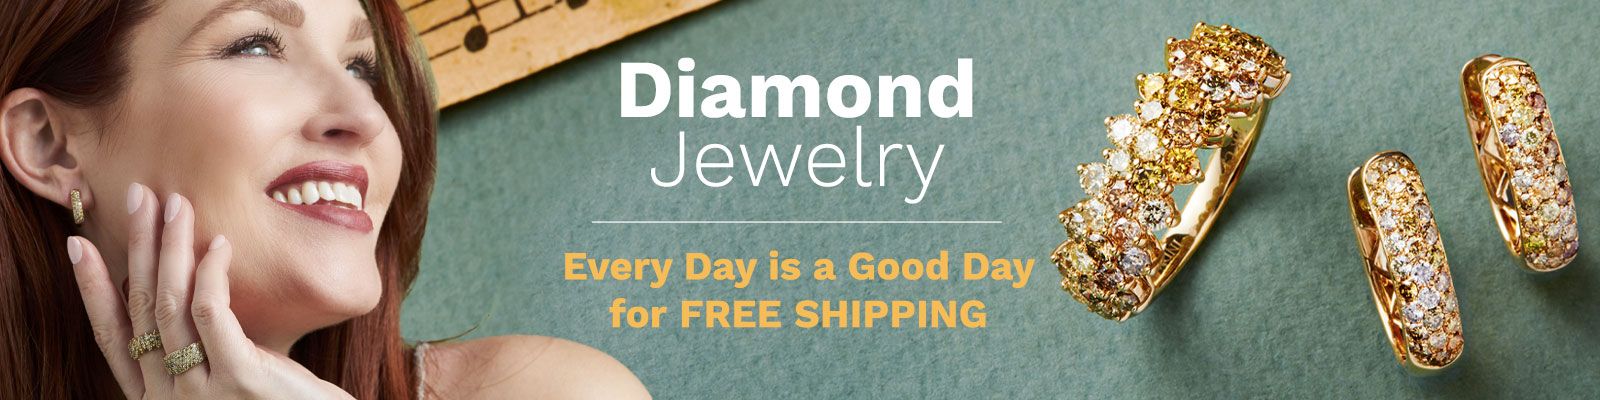 Diamond Jewelry 211-678, 210-073, 210-076